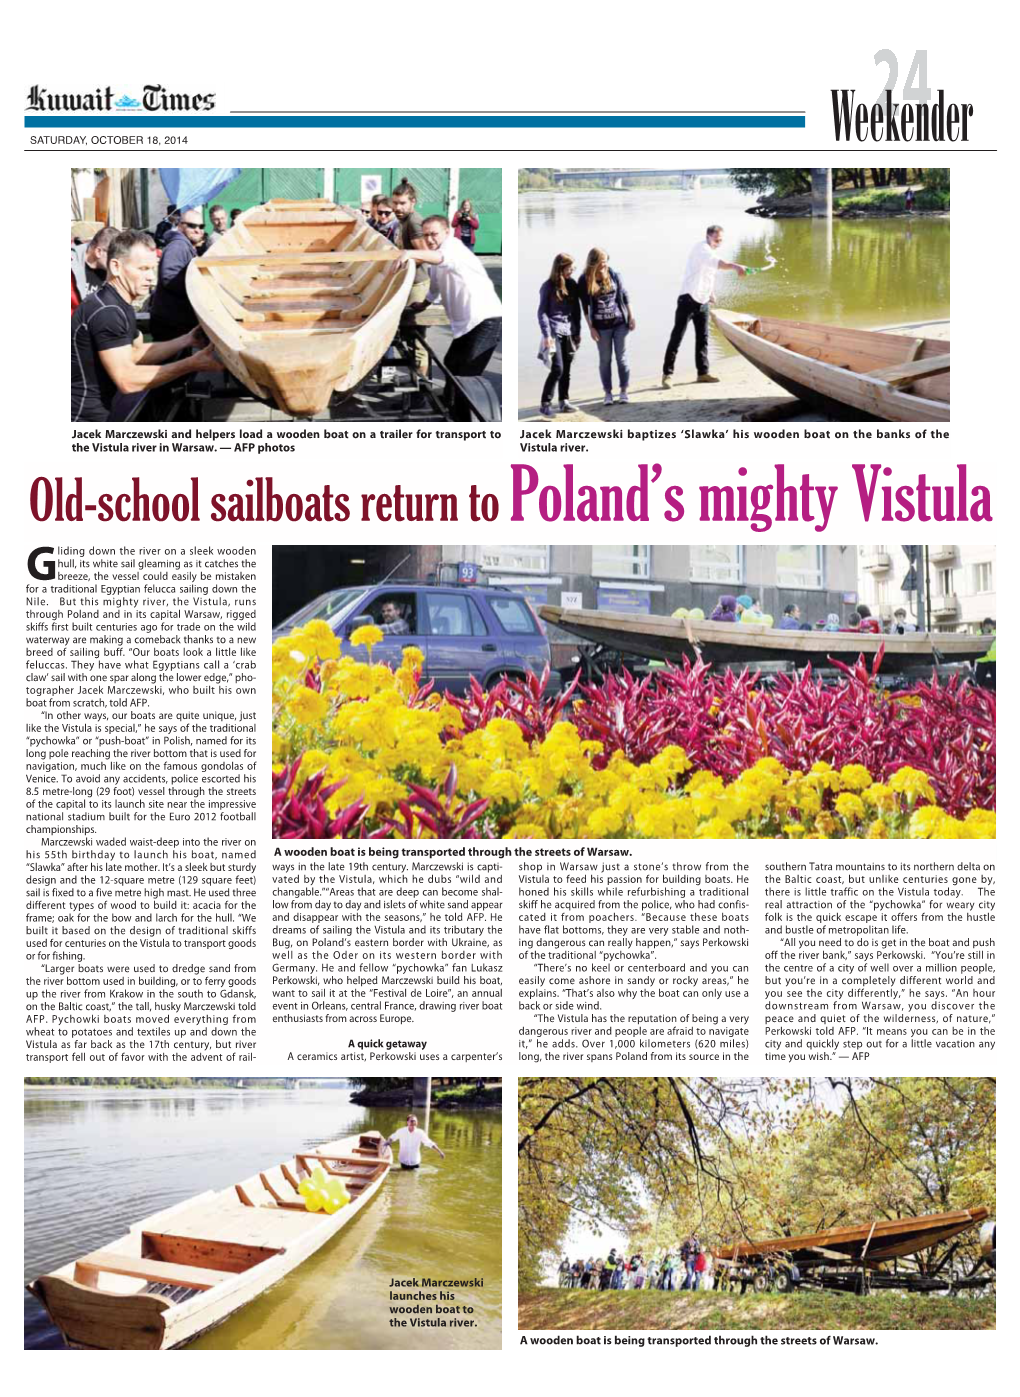 Old-School Sailboats Return to Poland's Mighty Vistula